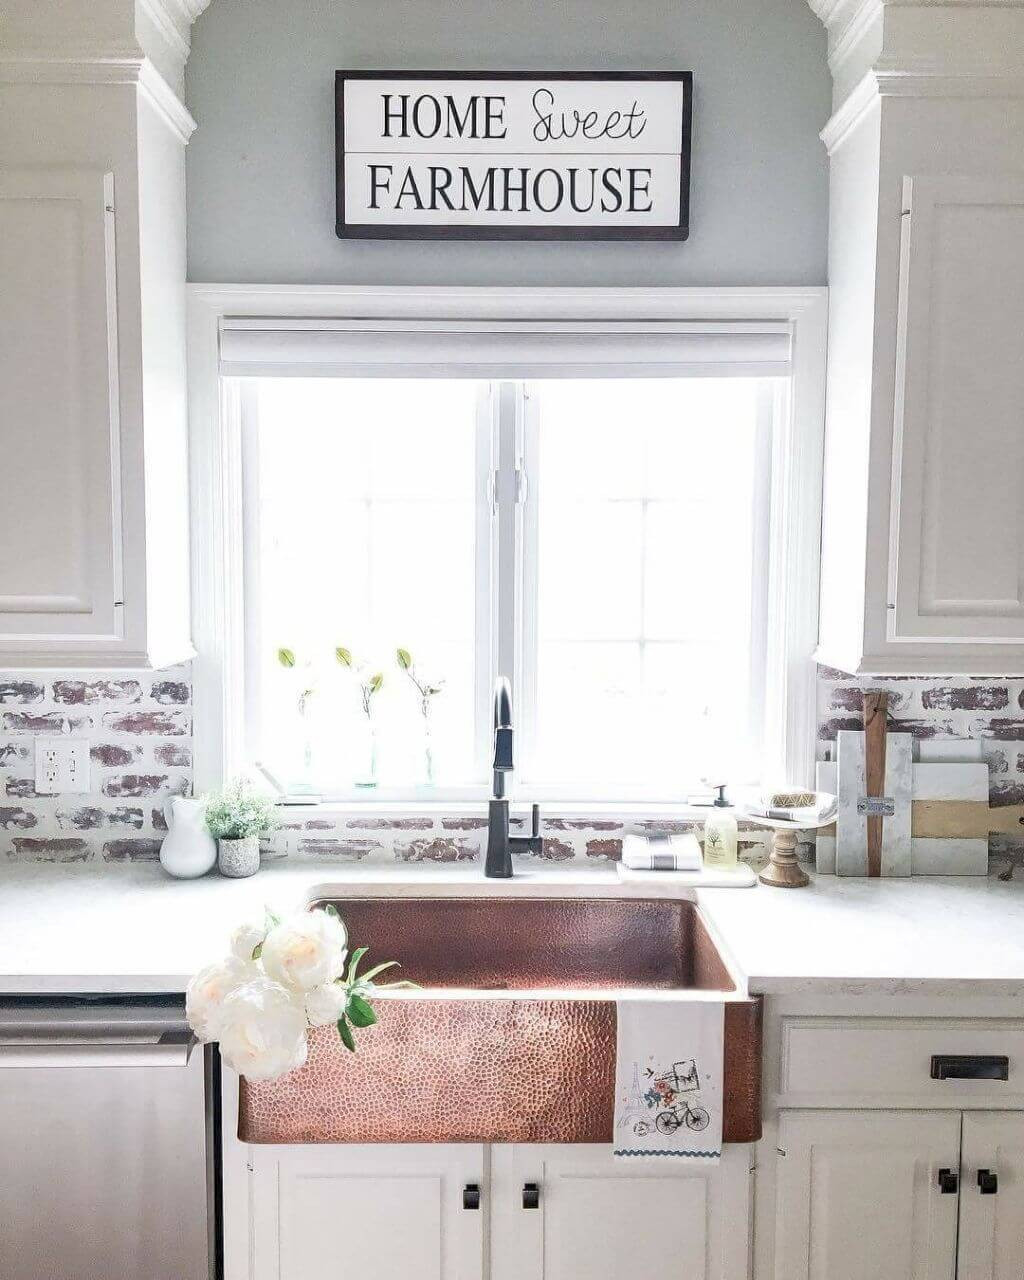 Farmhouse Kitchen Backsplash Ideas
 8 Best Farmhouse Kitchen Backsplash Ideas and Designs for 2019